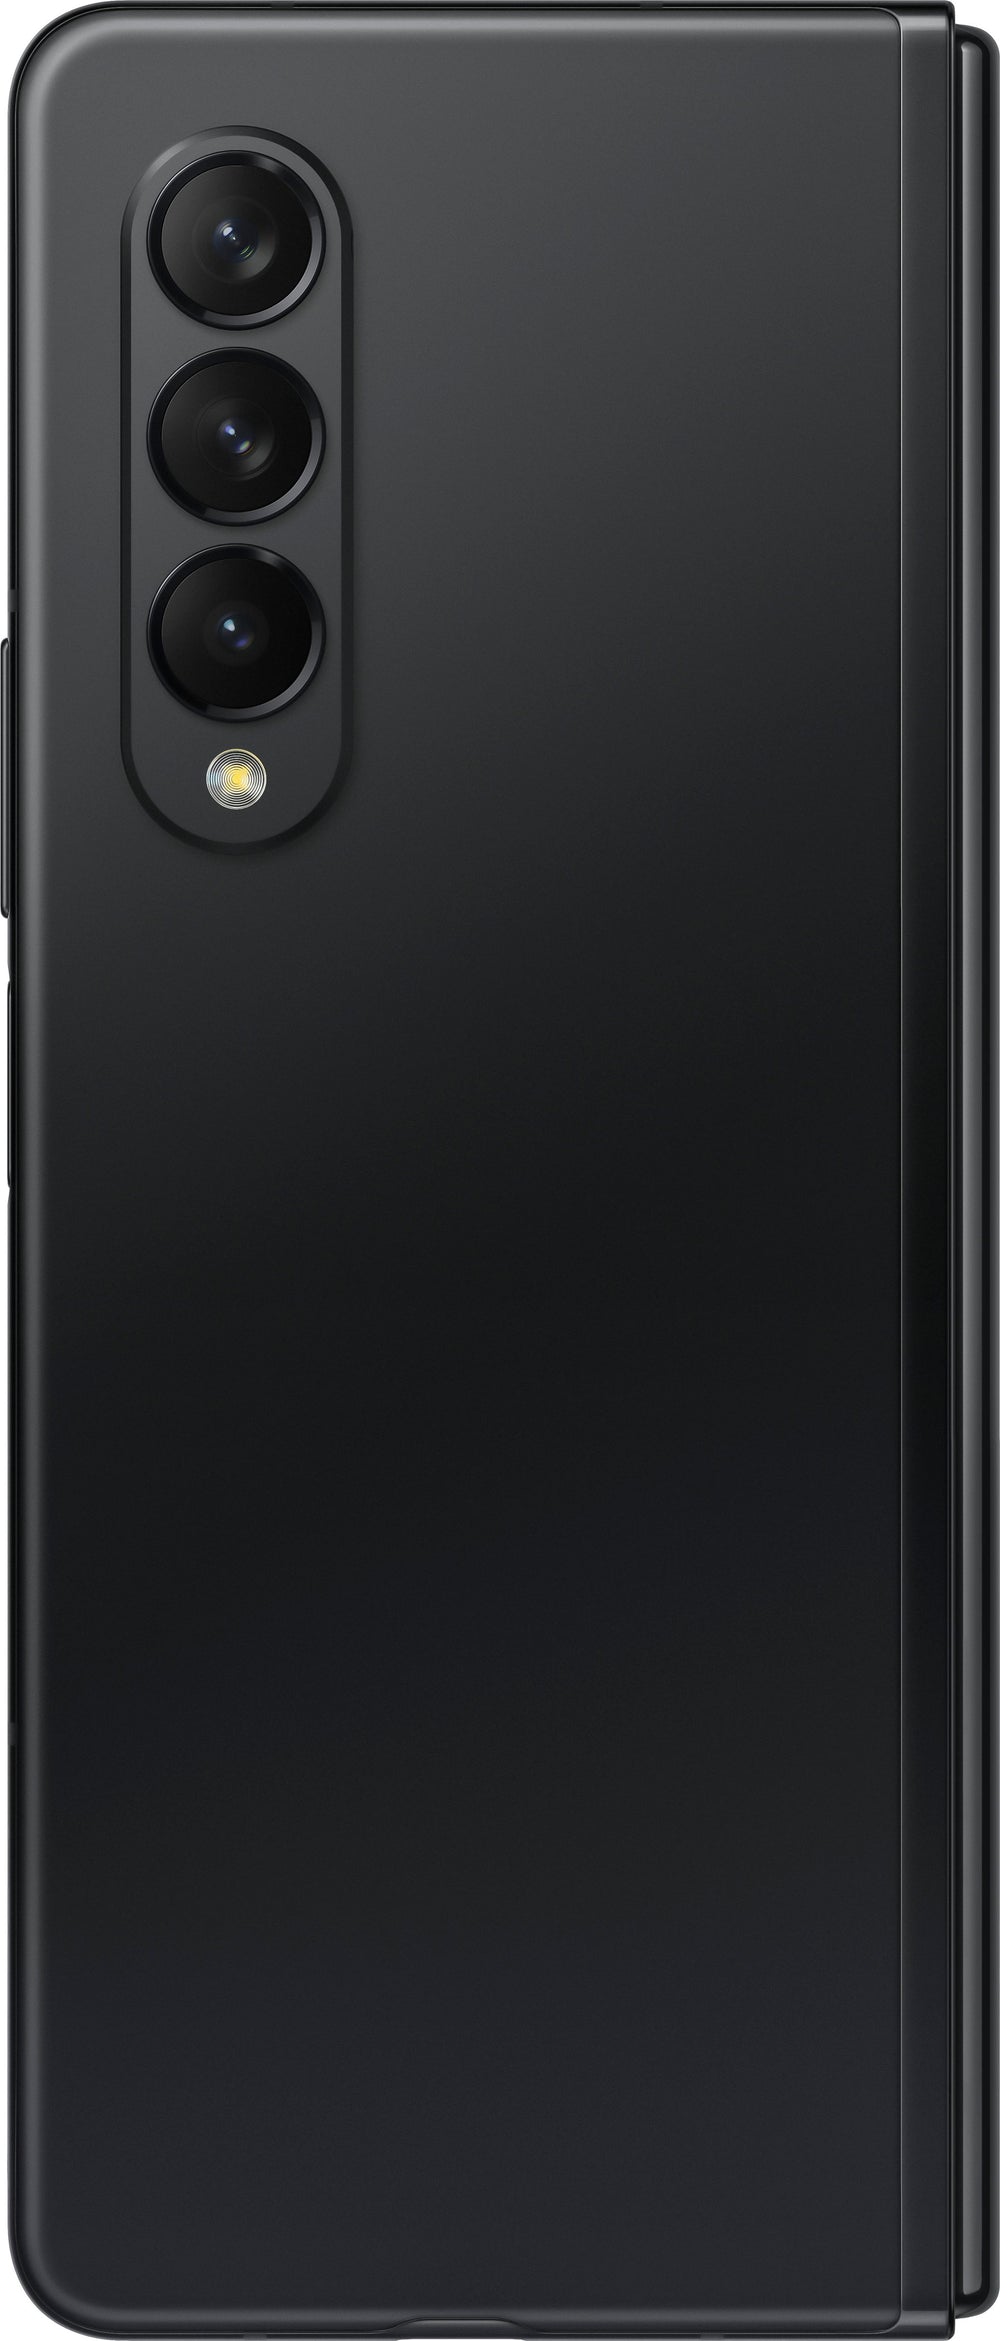 Samsung - Galaxy Z Fold3 5G 512GB (Unlocked) - Phantom Black_1